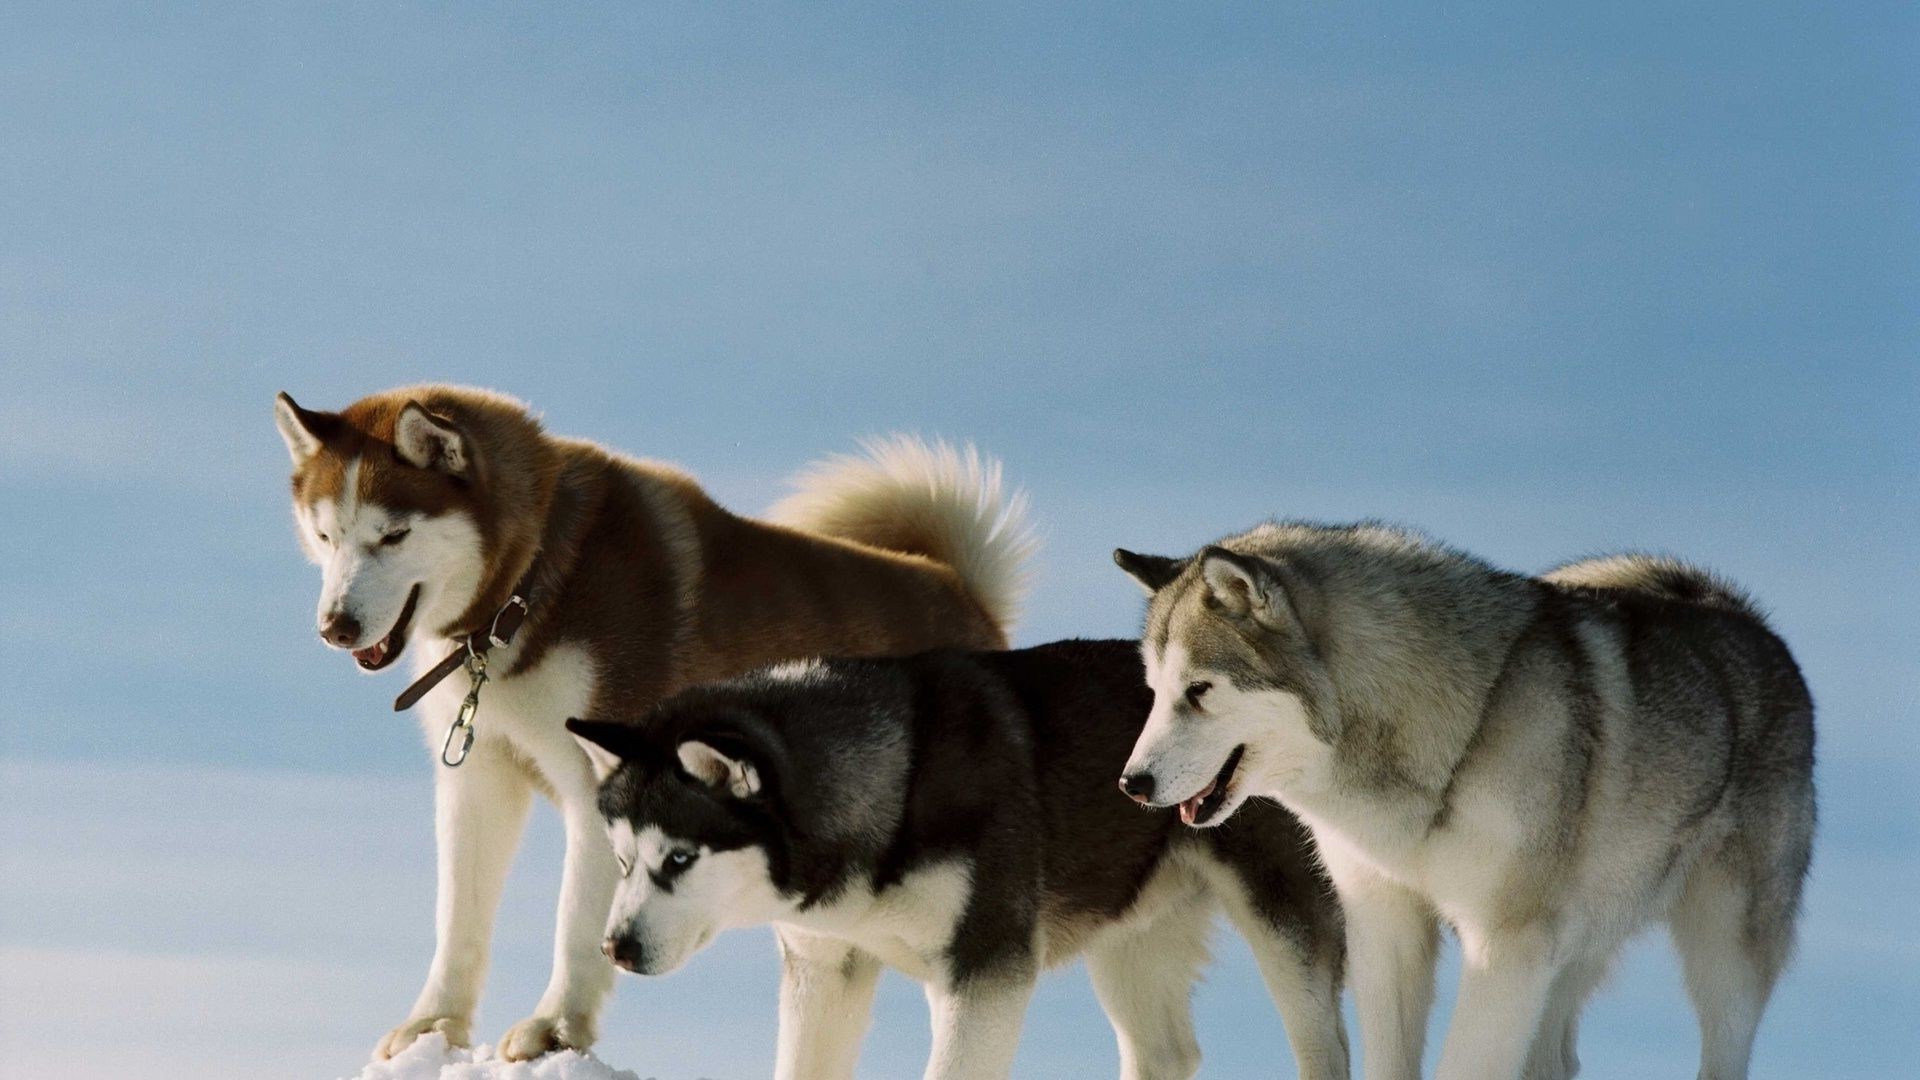 dogs dog mammal canine wolf frosty sledge animal eskimo dog looking portrait cute eskimo winter two fur snow pet polar eye